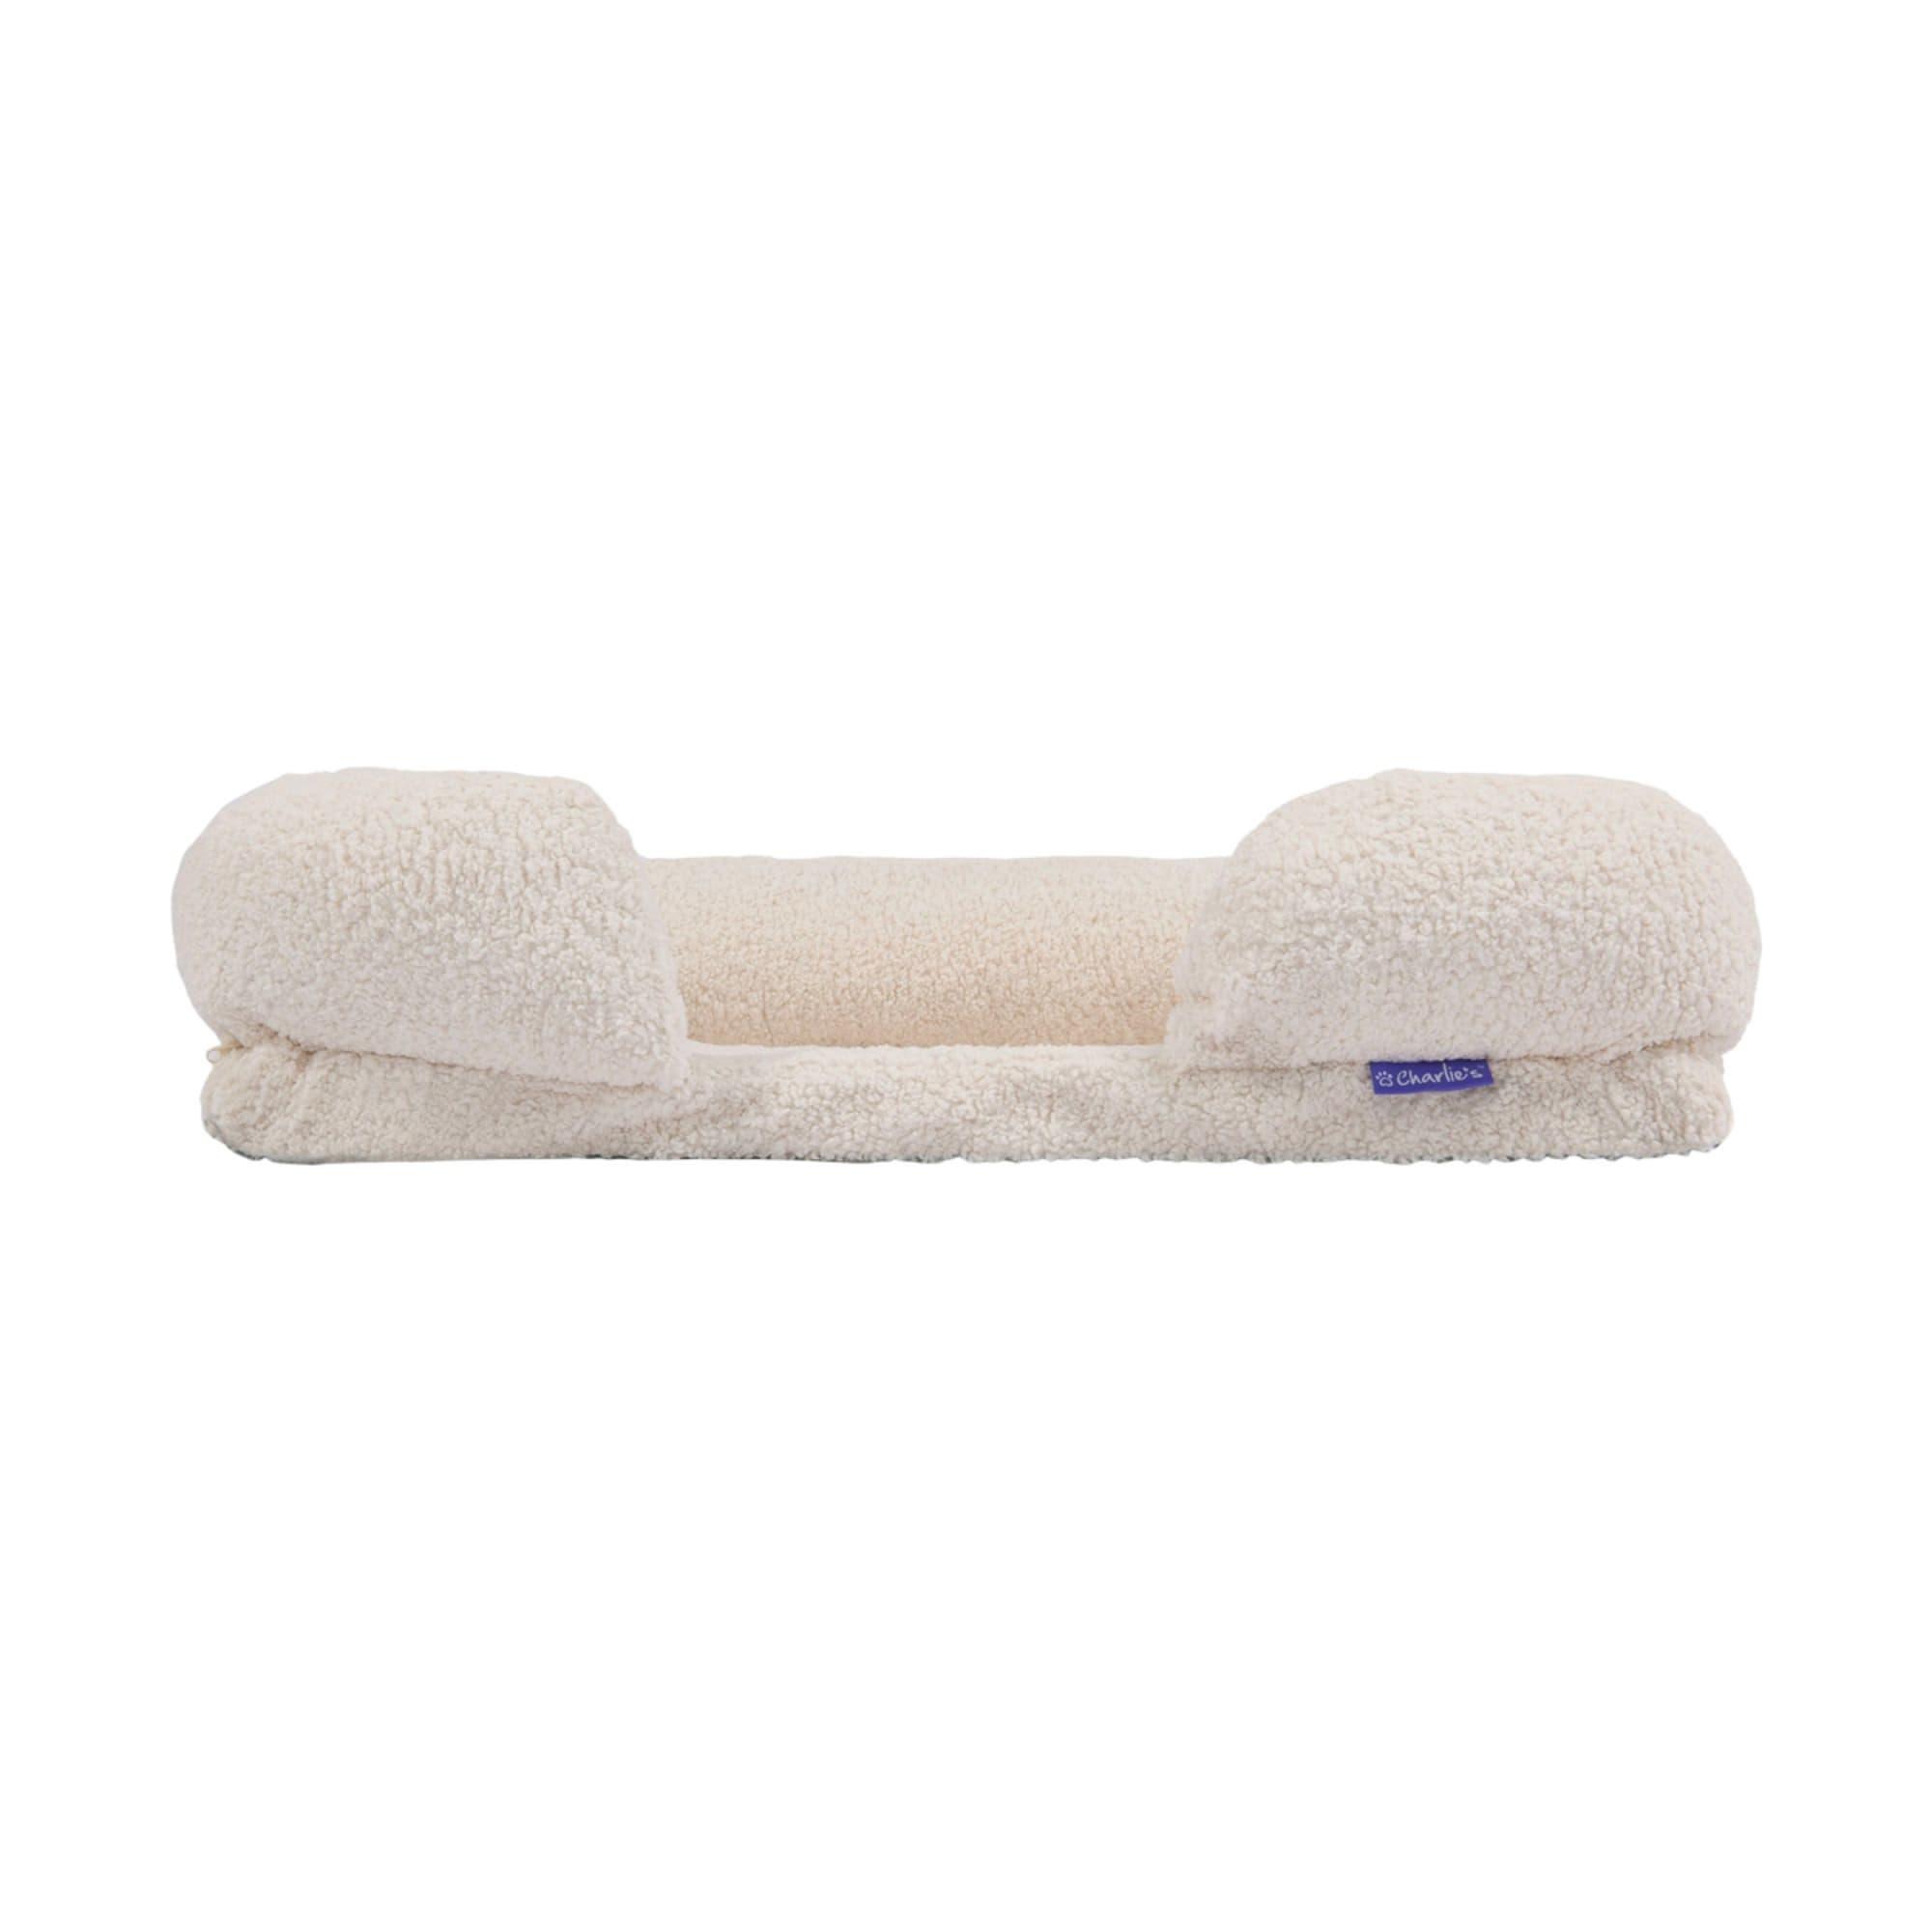 Charlie's Teddy Fleece Orthopedic Memory Foam Sofa Dog Bed Medium Cream Image 5